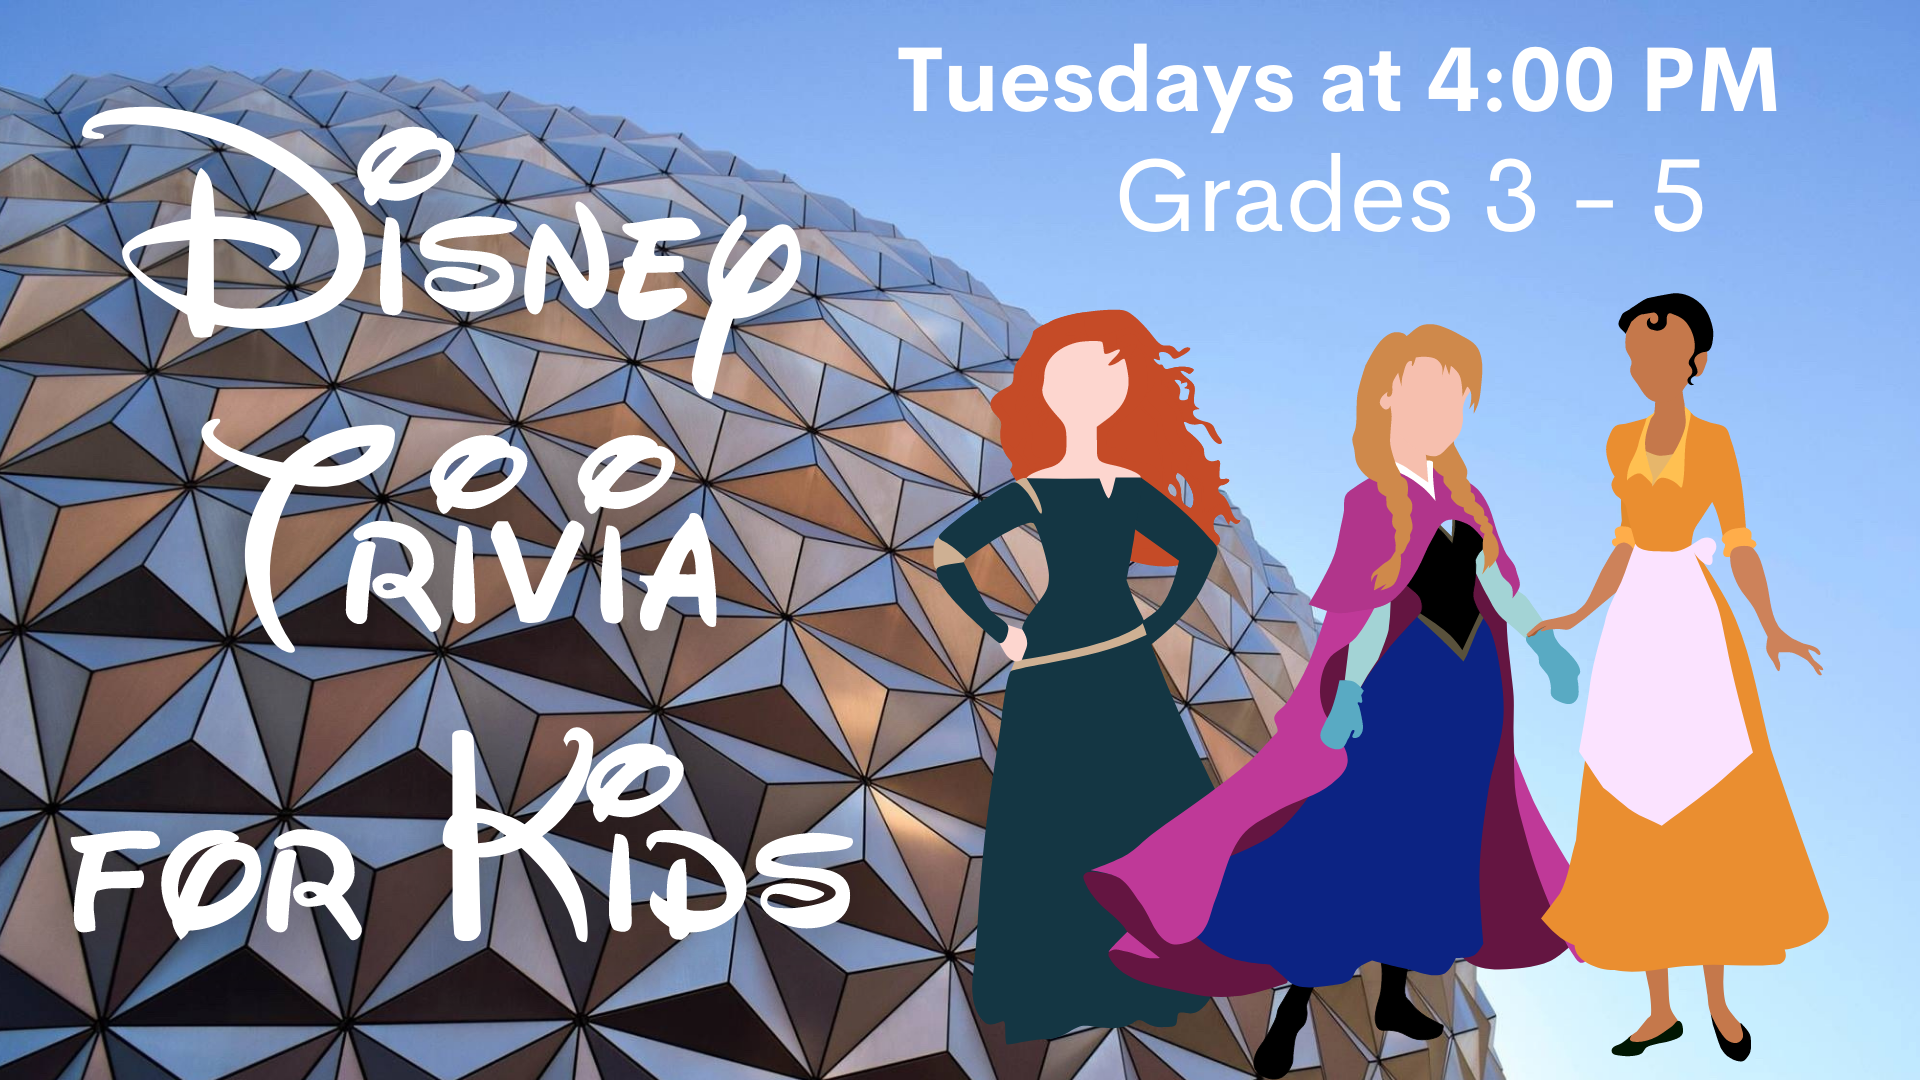 Disney Trivia for Kids